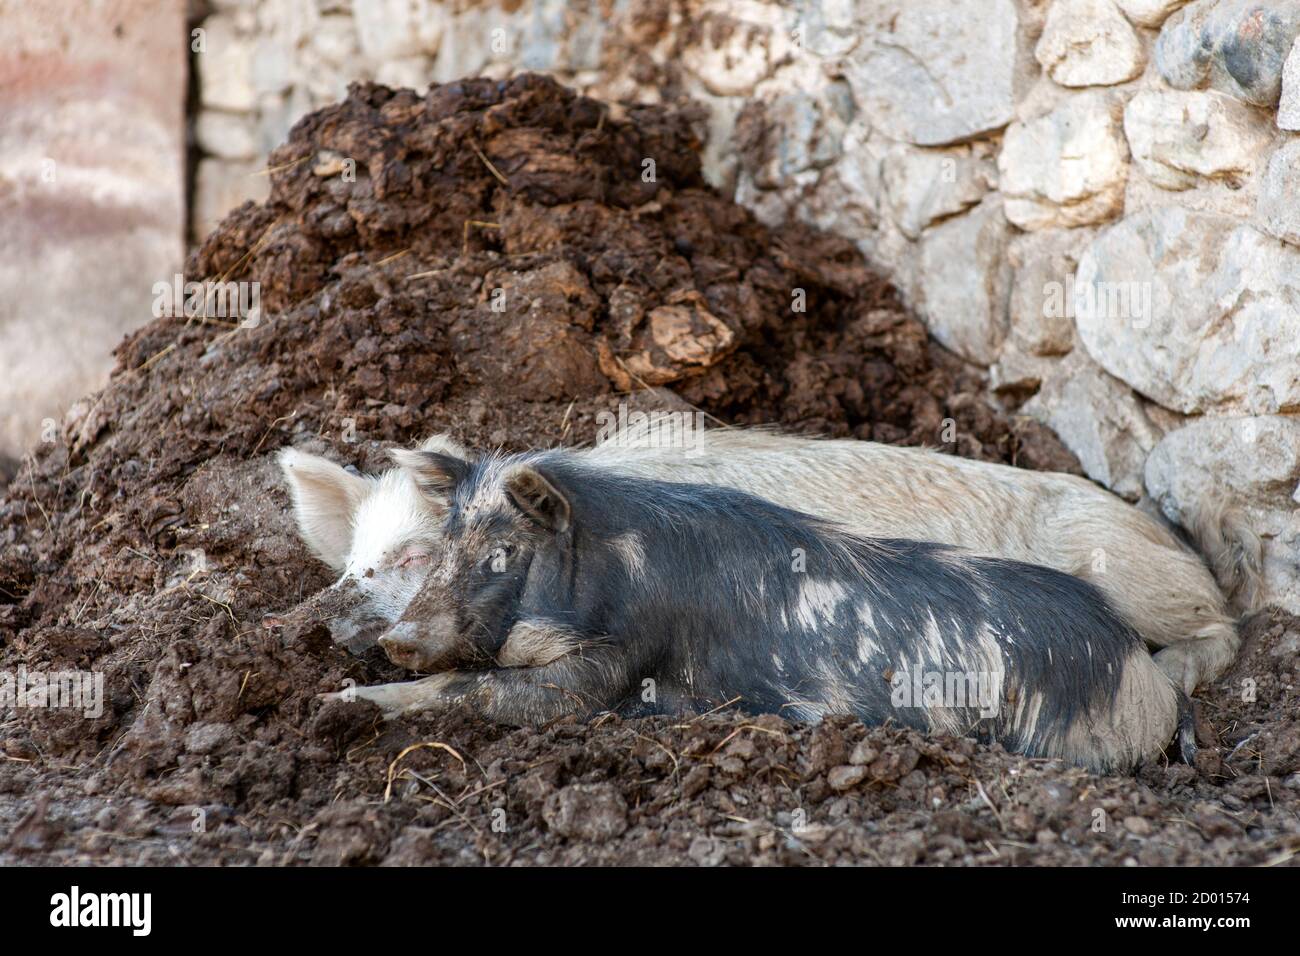 Dos cerdos mienten contentosamente en un montón de estiércol. Foto de stock